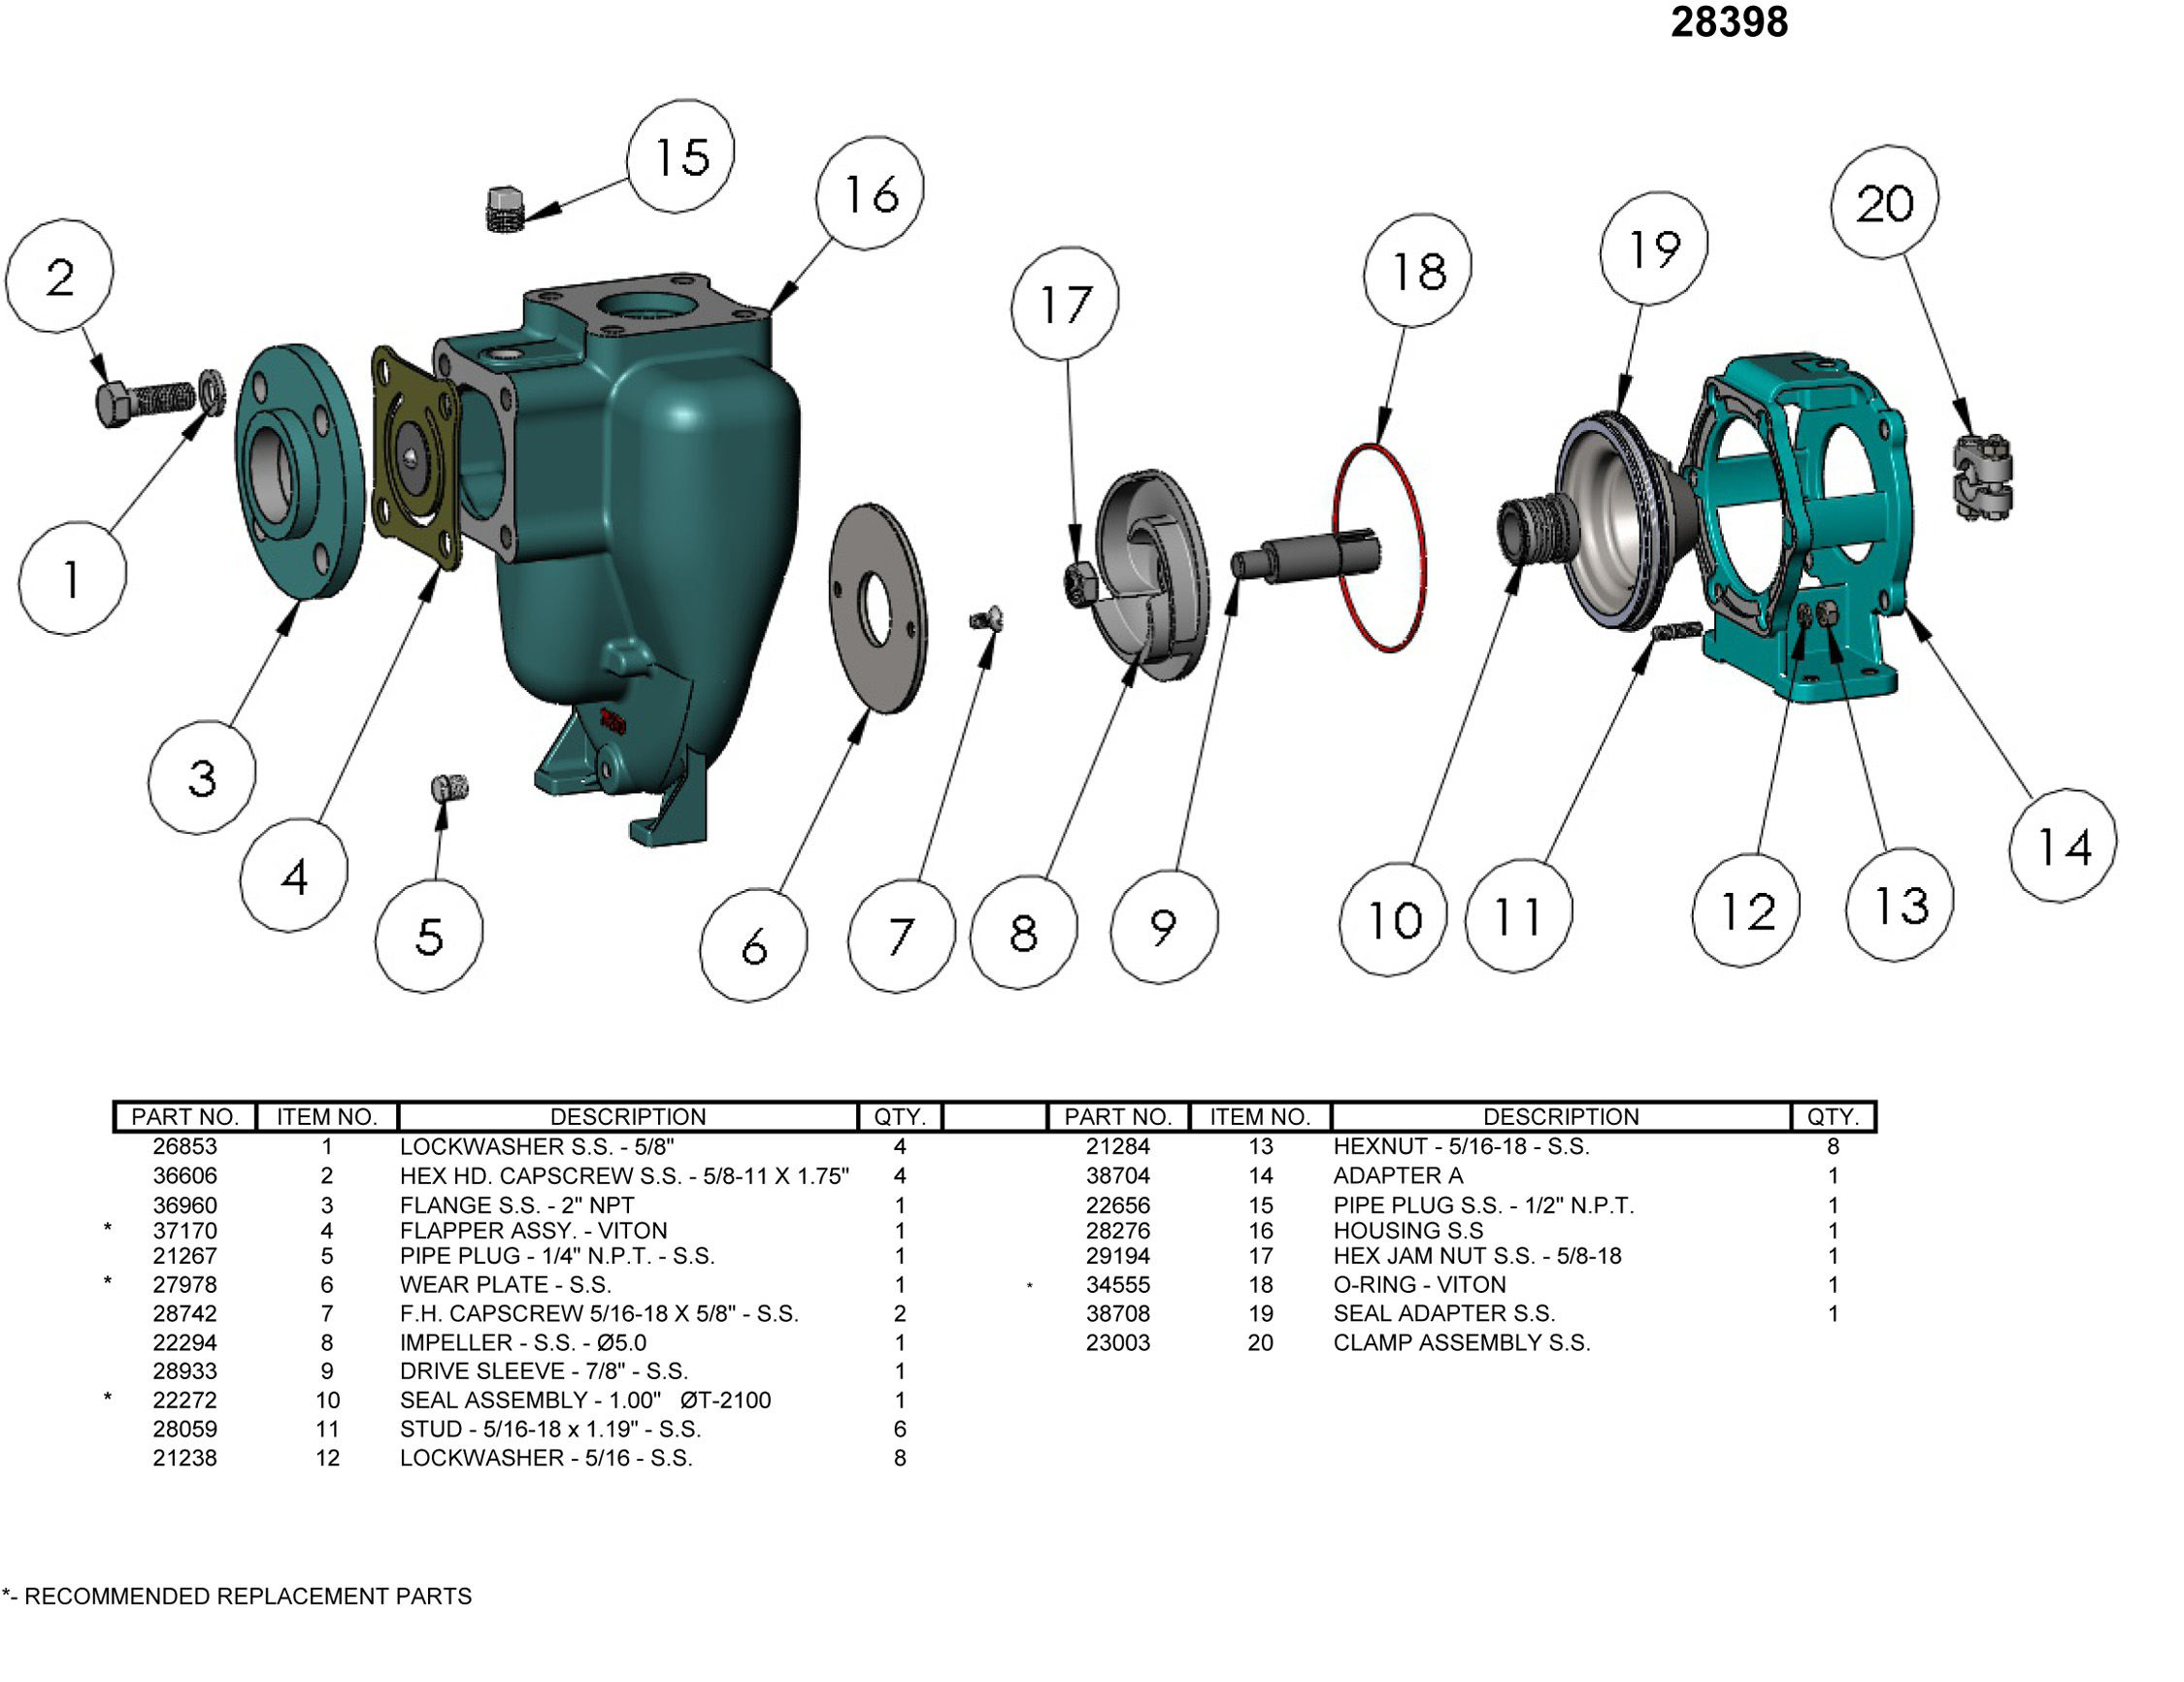 flomax-8-316-ss-industrial-vacuum-pump_parts-list-28398